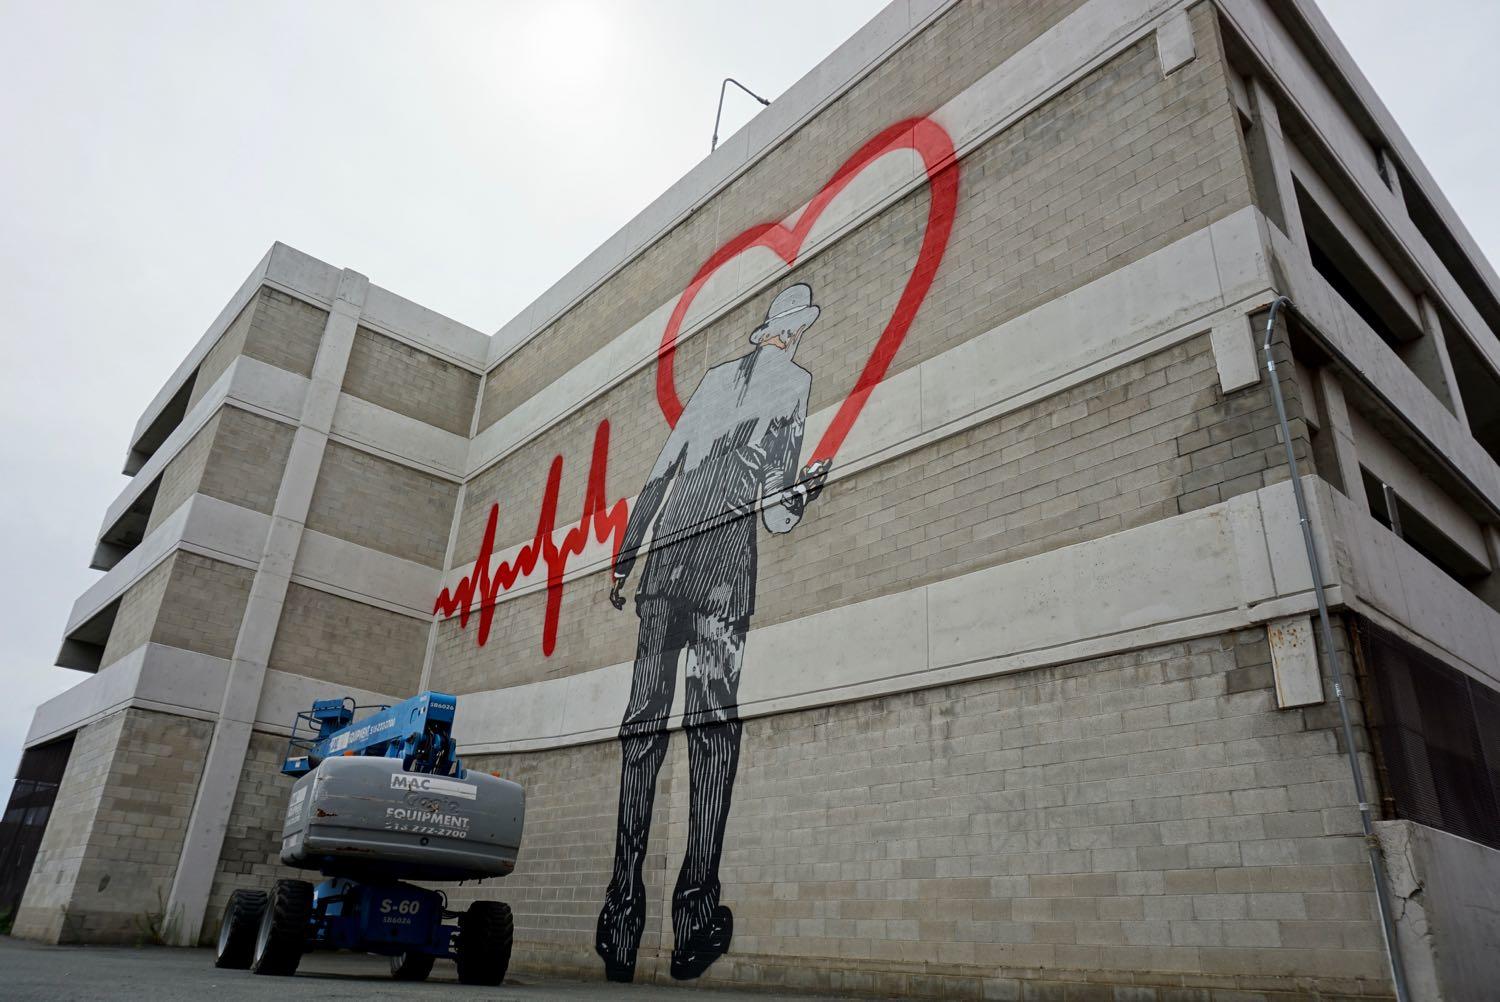 Nick Walker's new mural "Love Goes On"